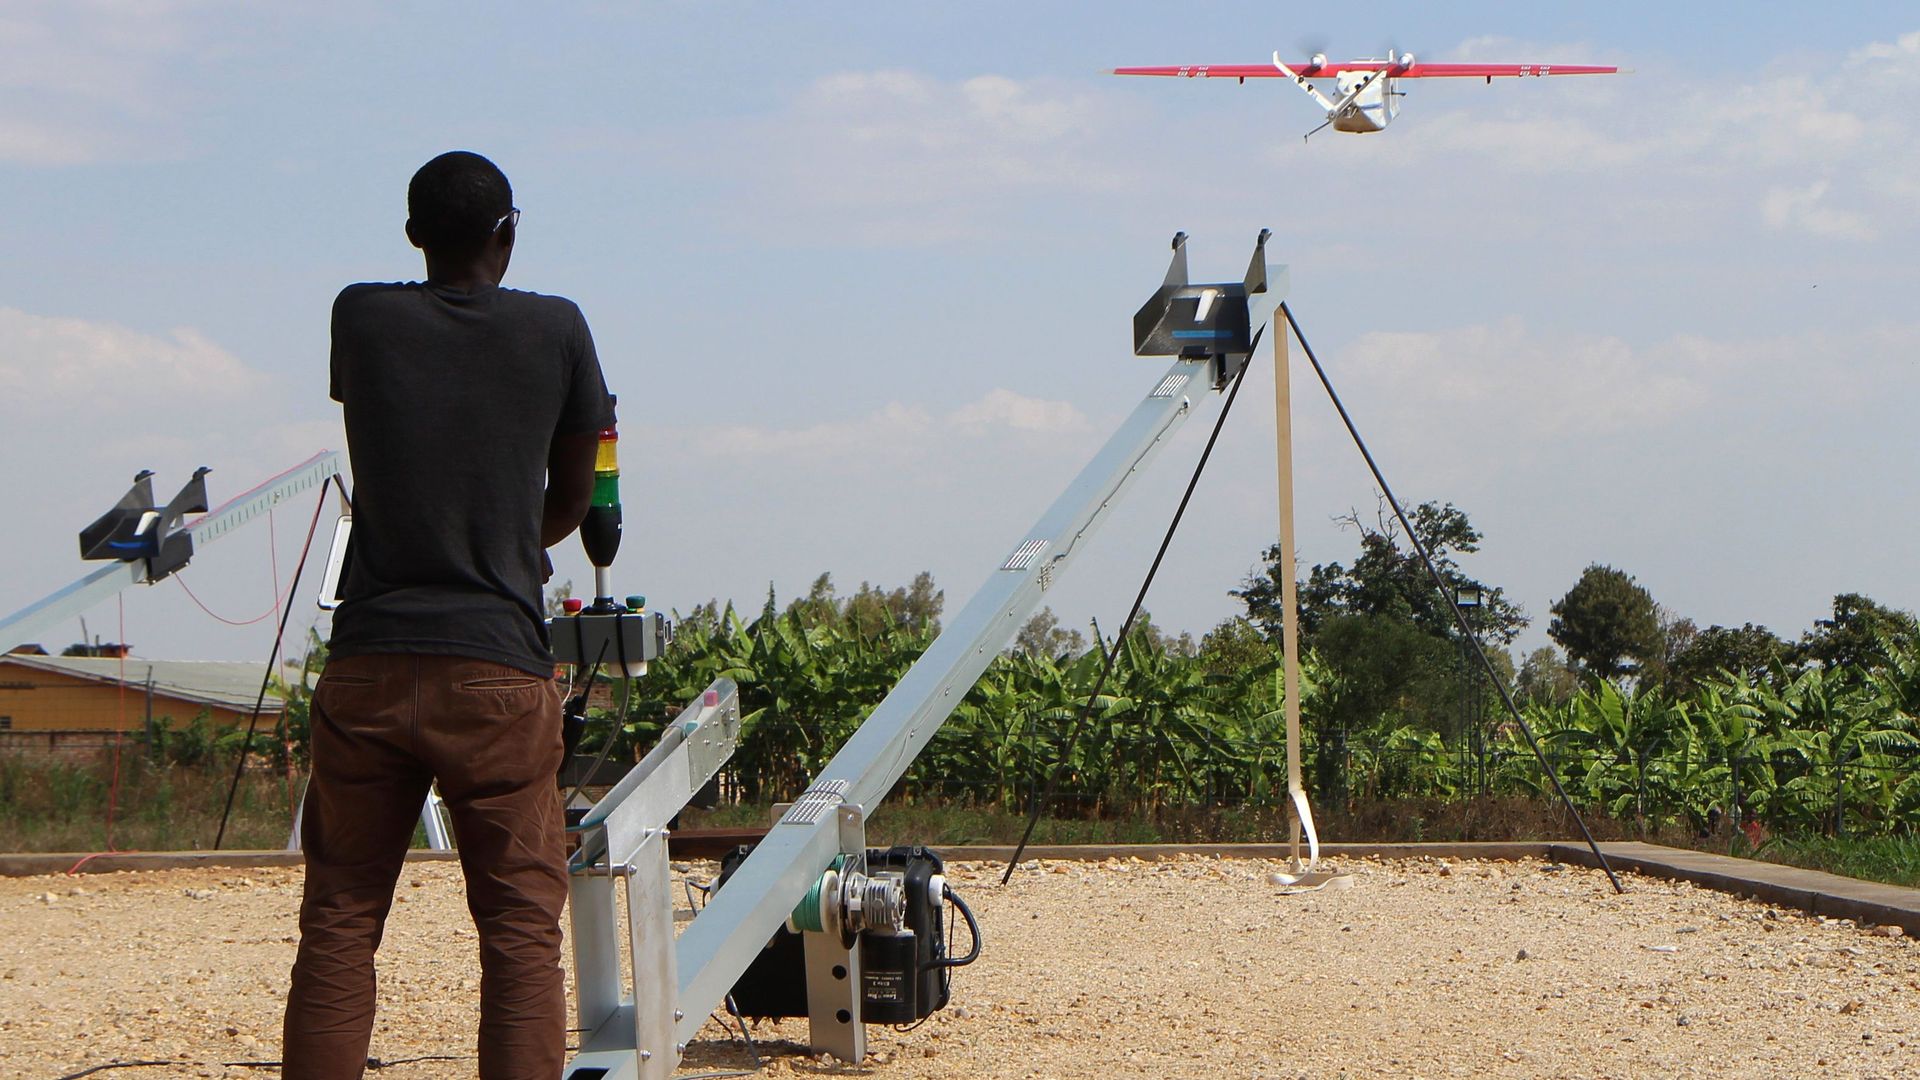 A Zipline technician launches a drone on October 12, 2016 in Rwanda.